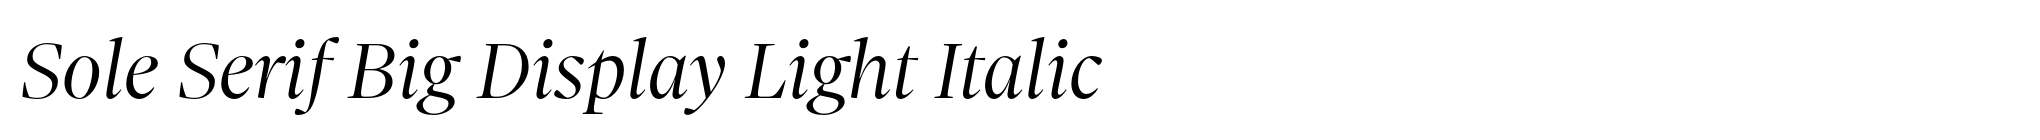 Sole Serif Big Display Light Italic image